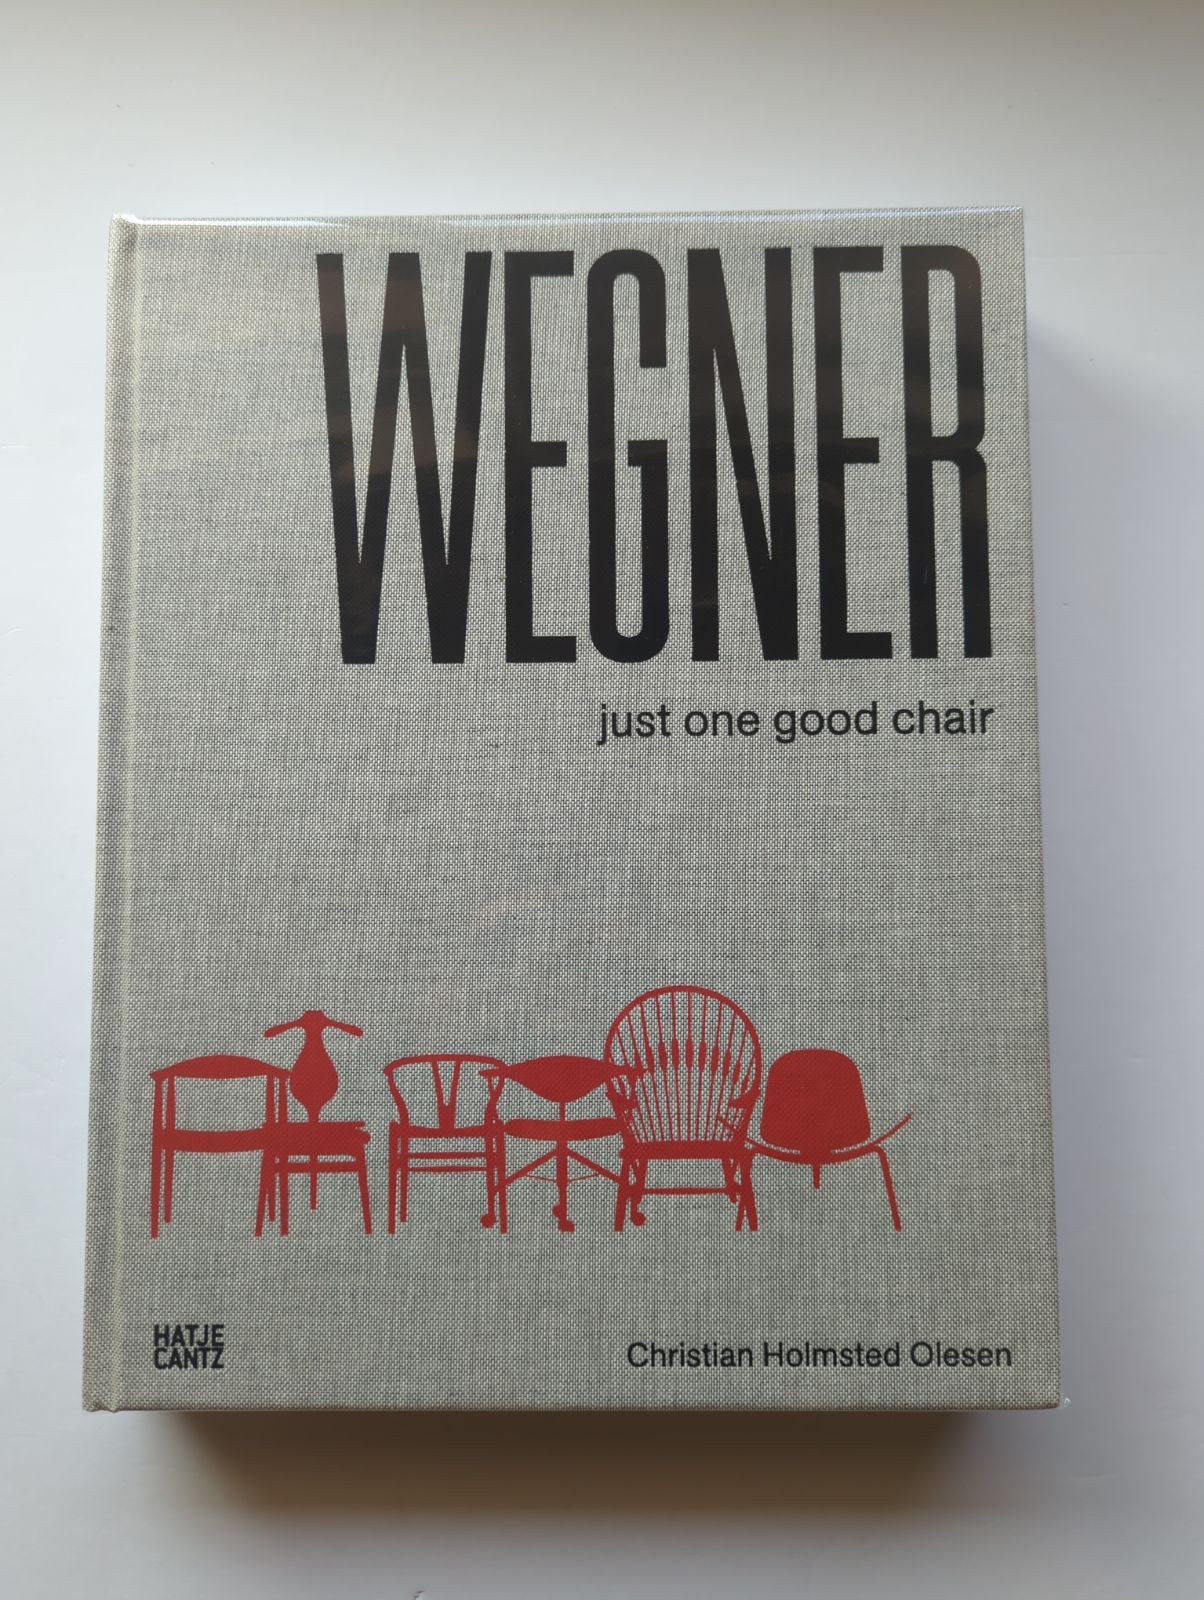 WEGNER just one good chair